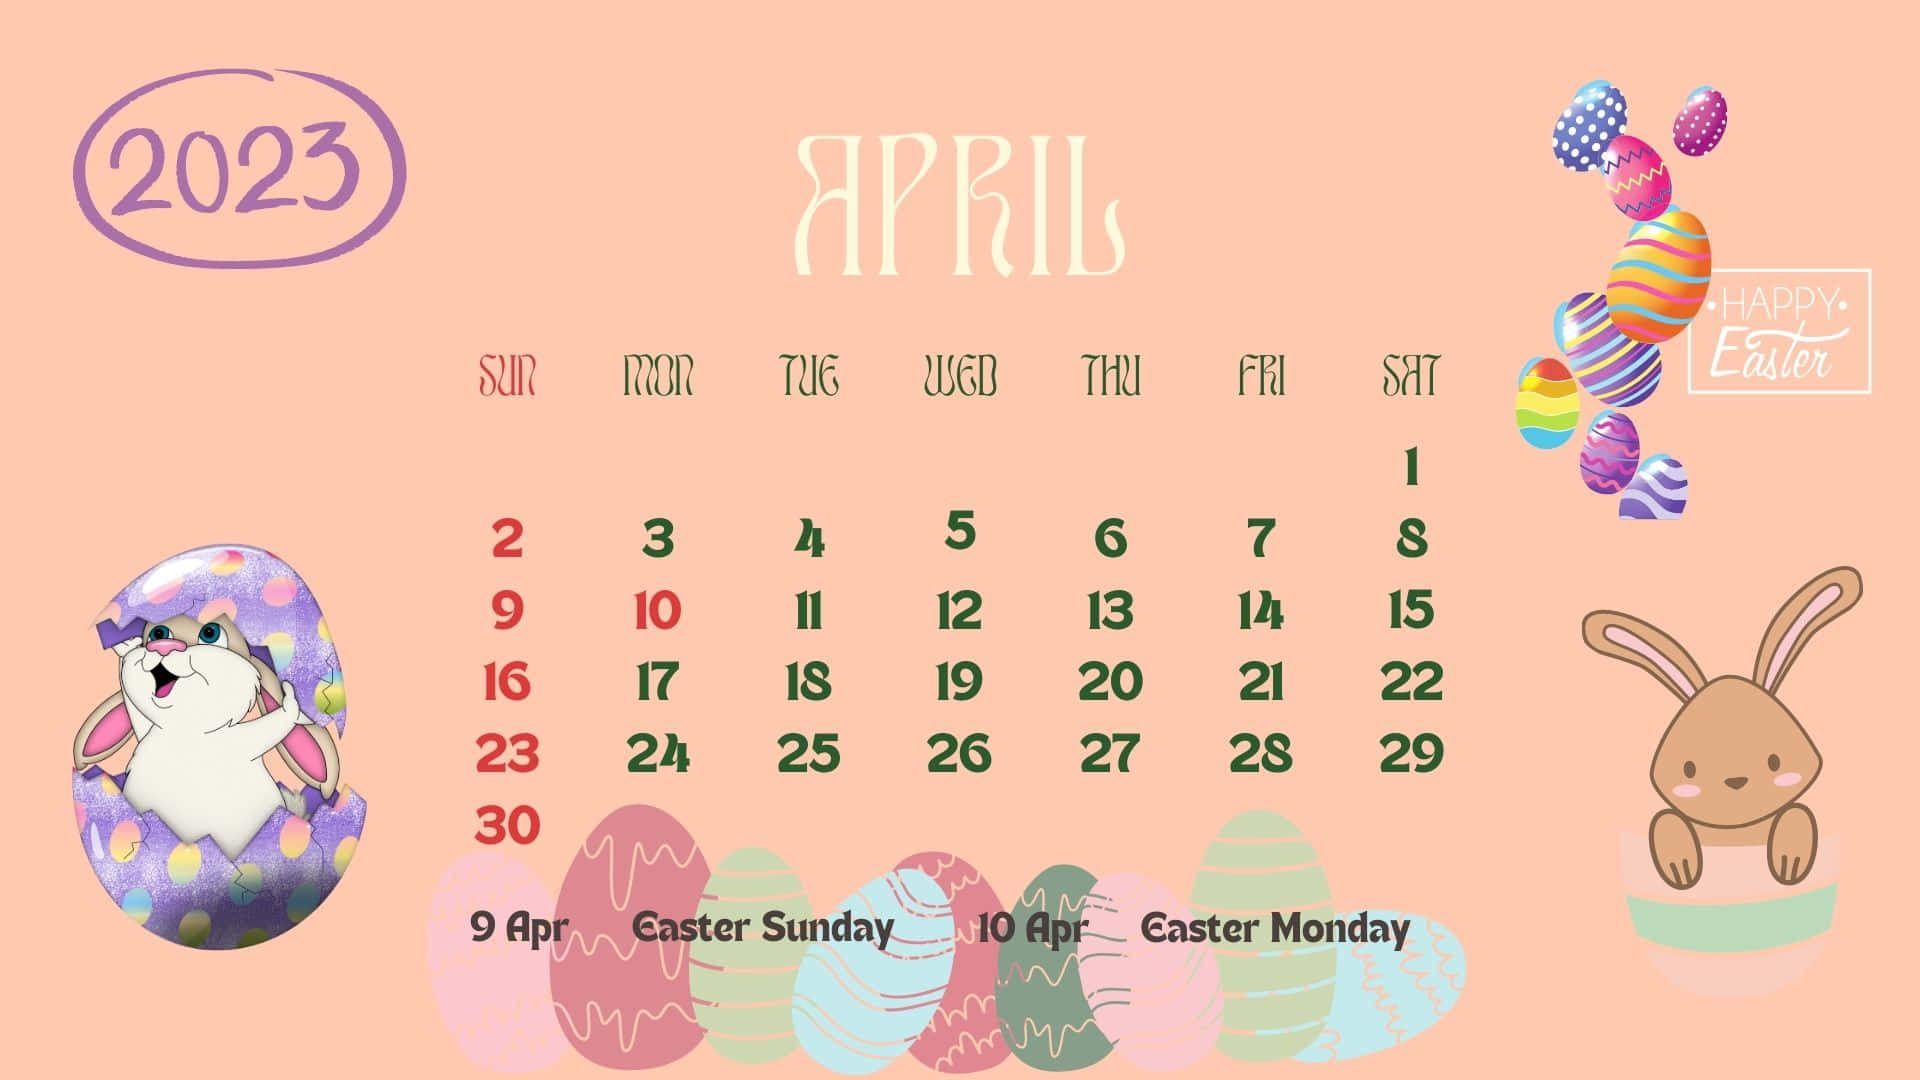 April2023 Kalender Wallpaper